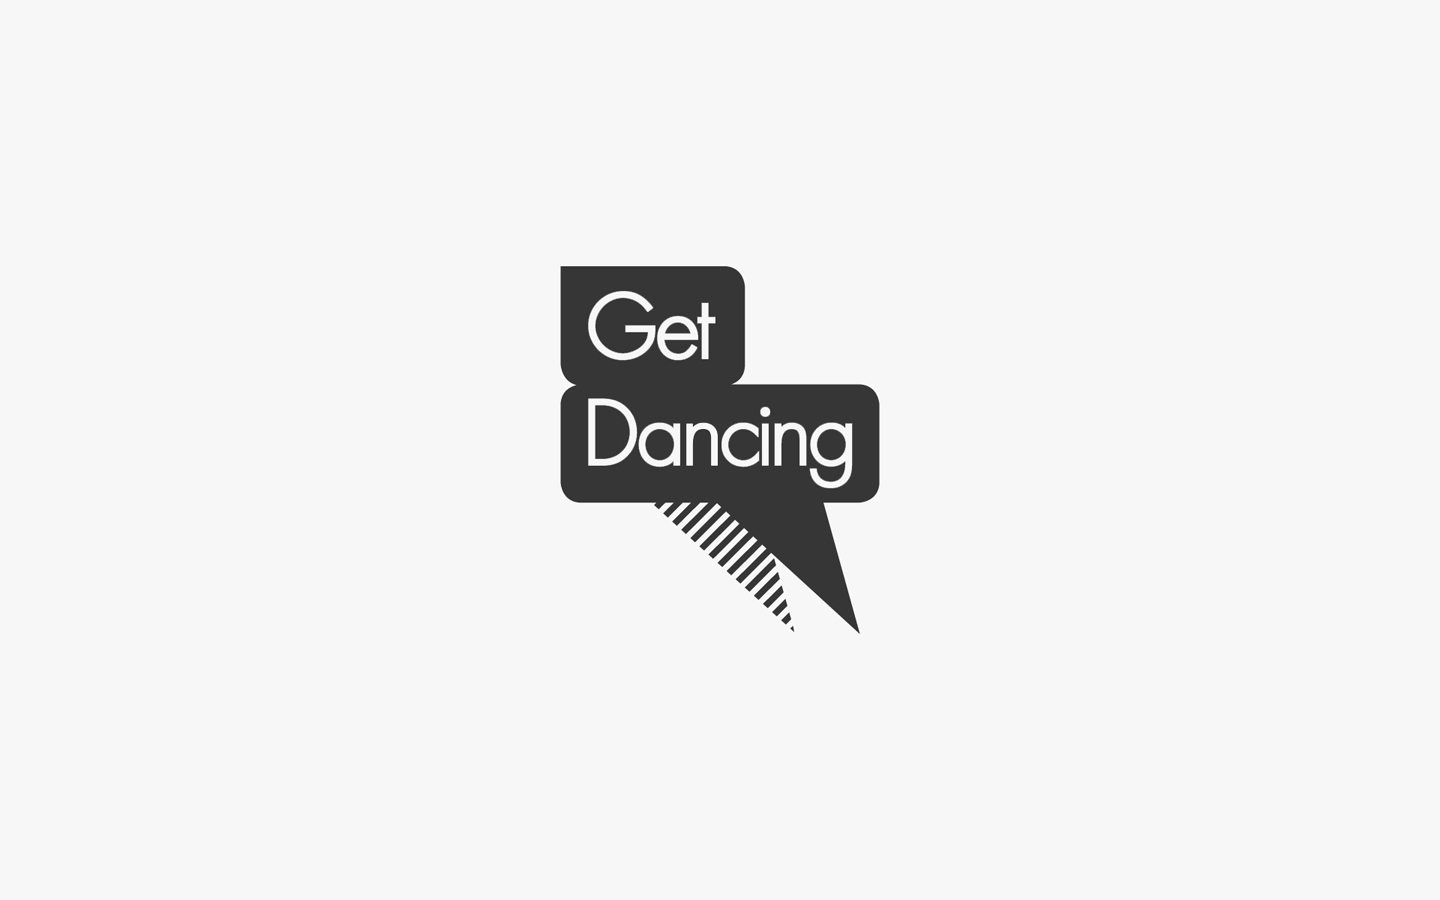 Get Dancing, Logo Design in Mono